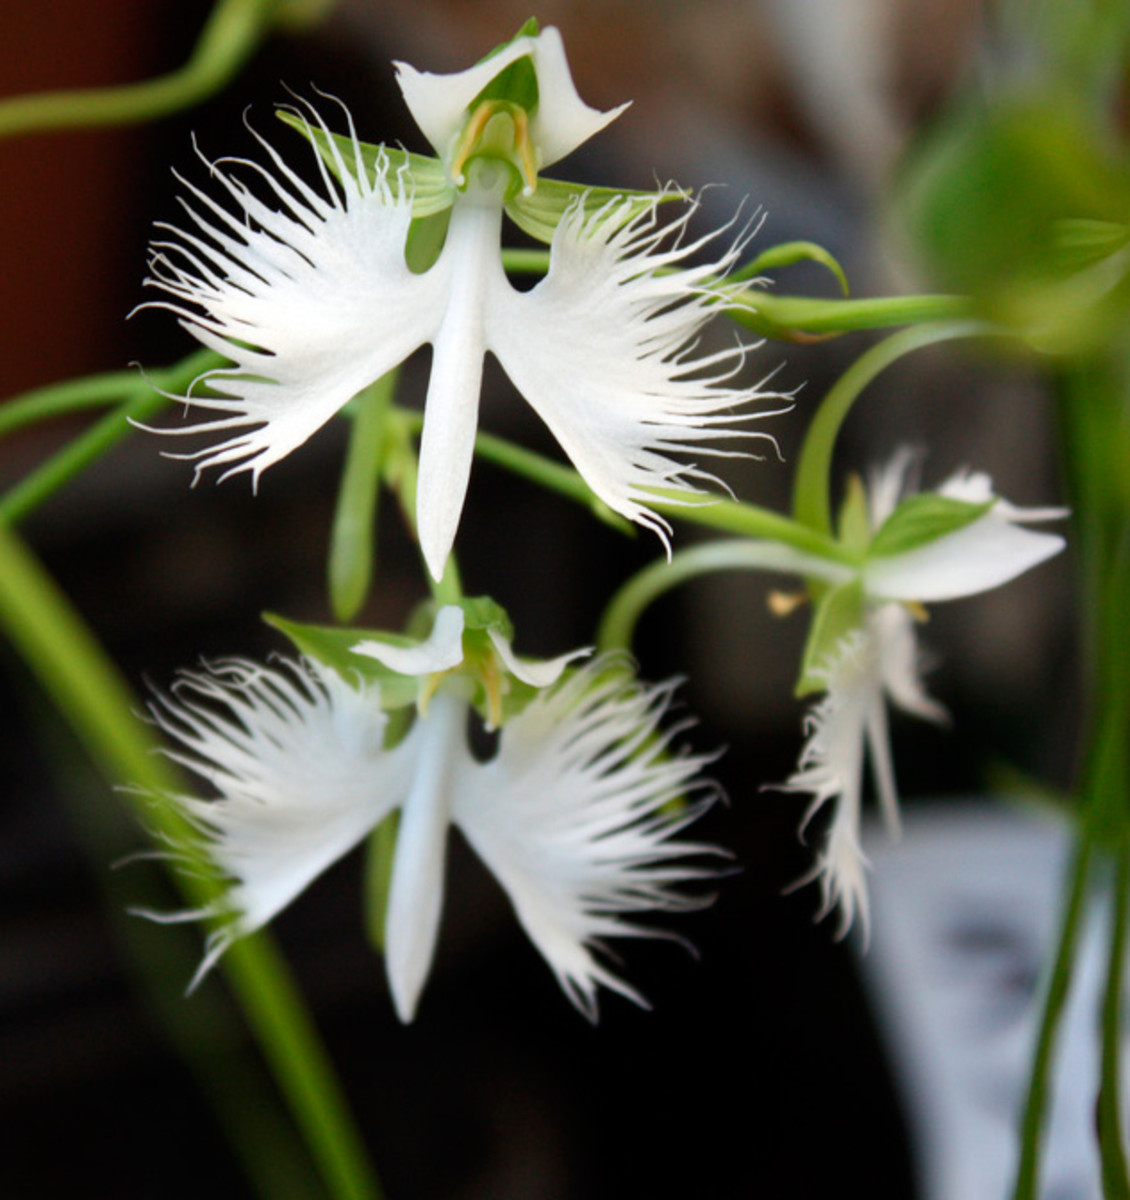 Habenaria radiata - the white egret orchid.